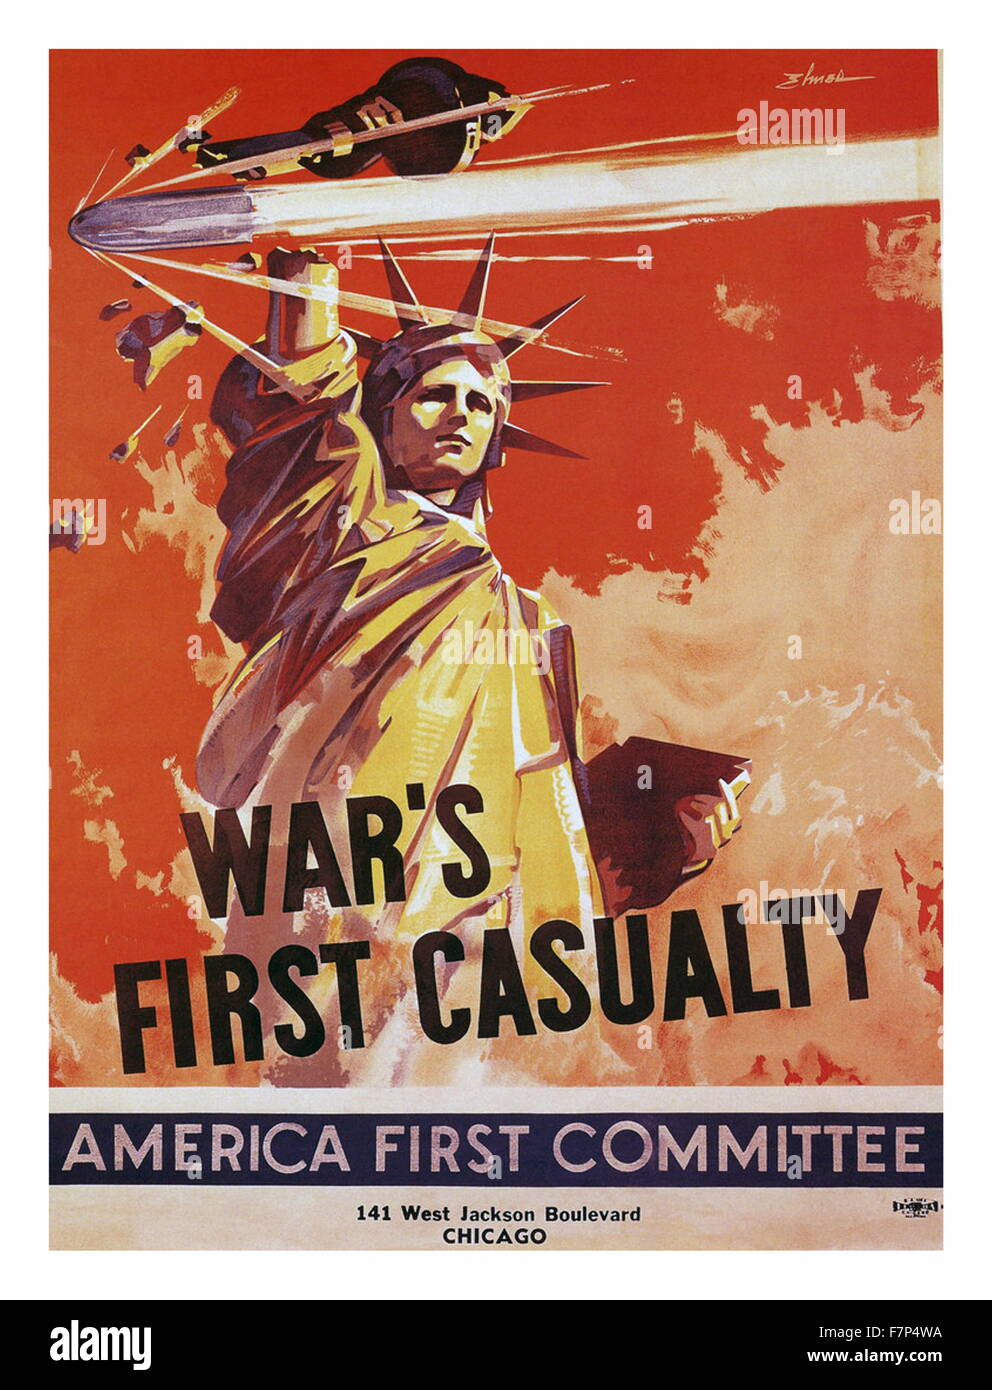 Propaganda Poster: Manifest Destiny